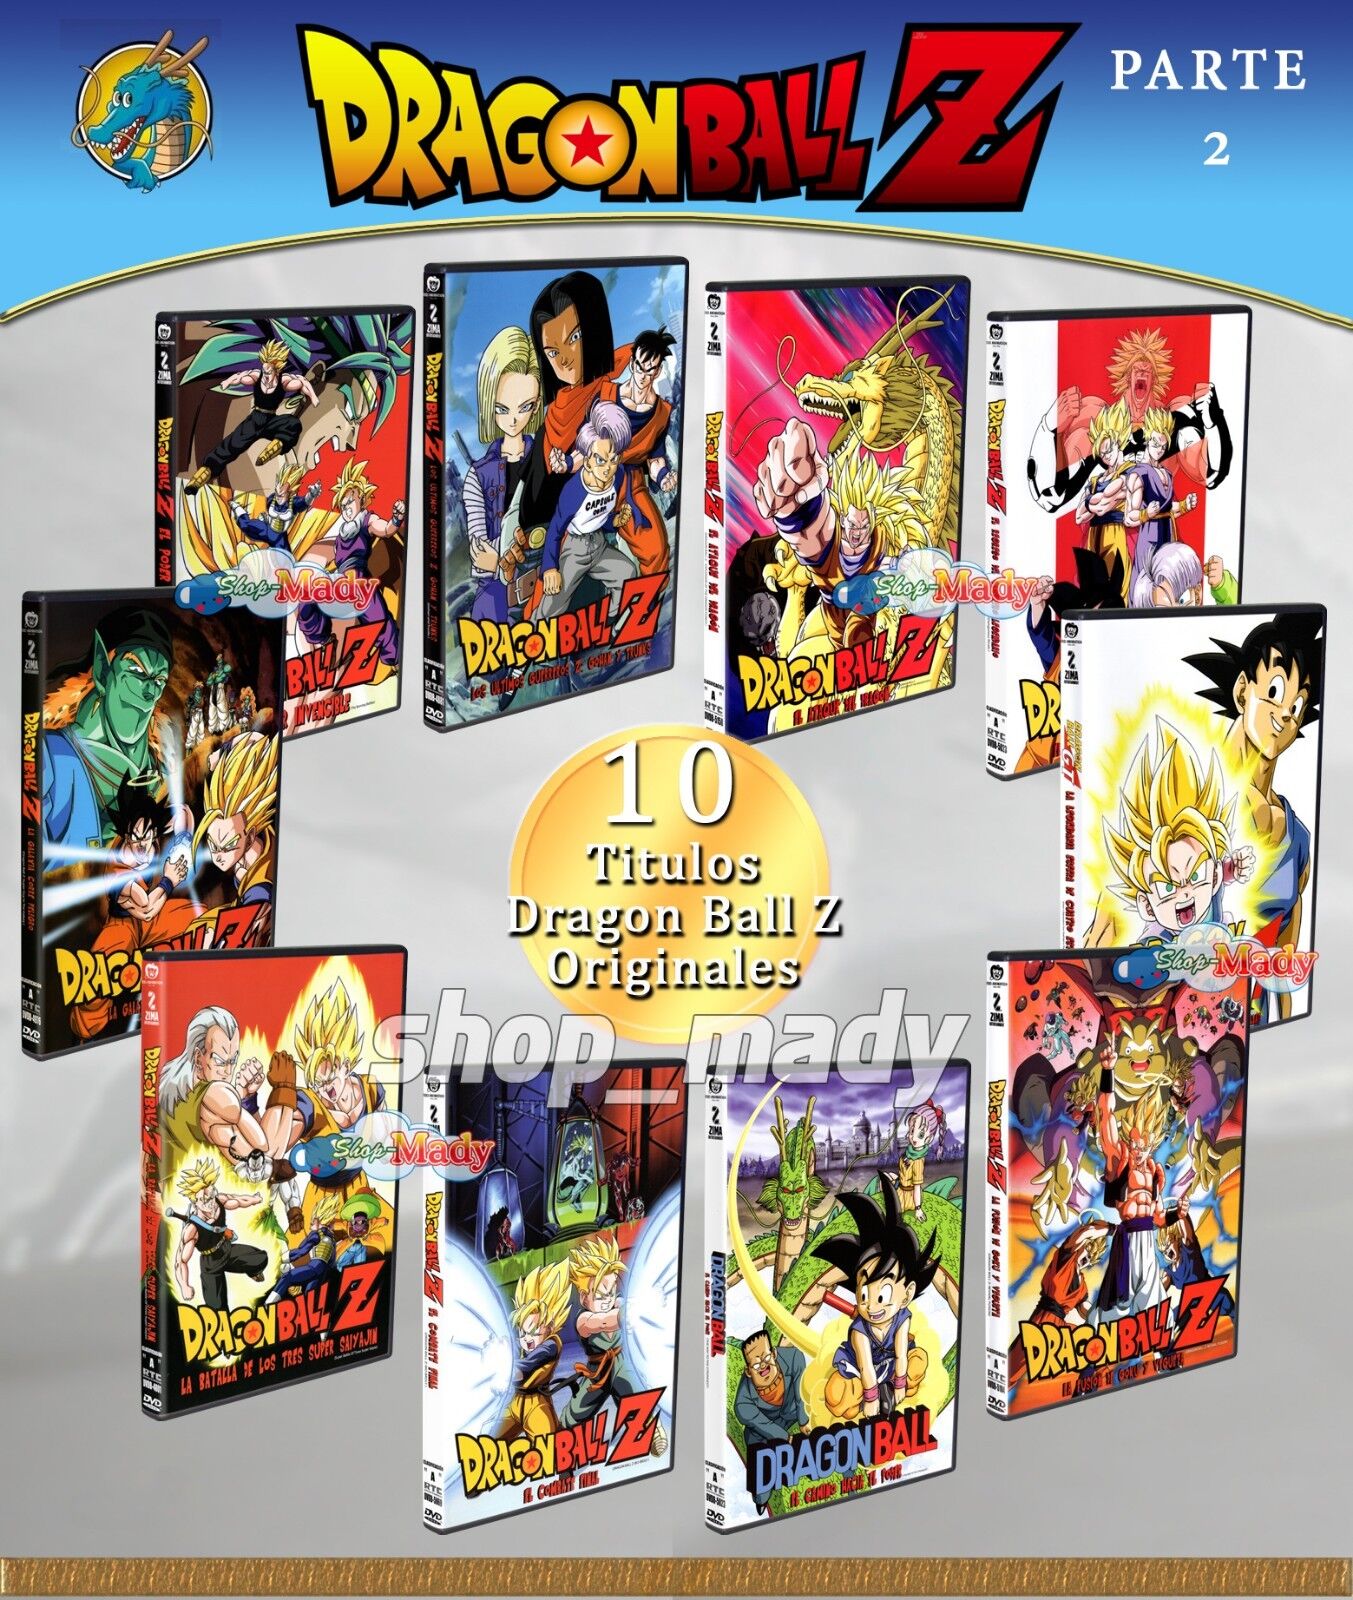 Paq. 10 de Dragon Ball Z DVD en ESPAÑOL LATINO Región 4 (Parte 2) | eBay